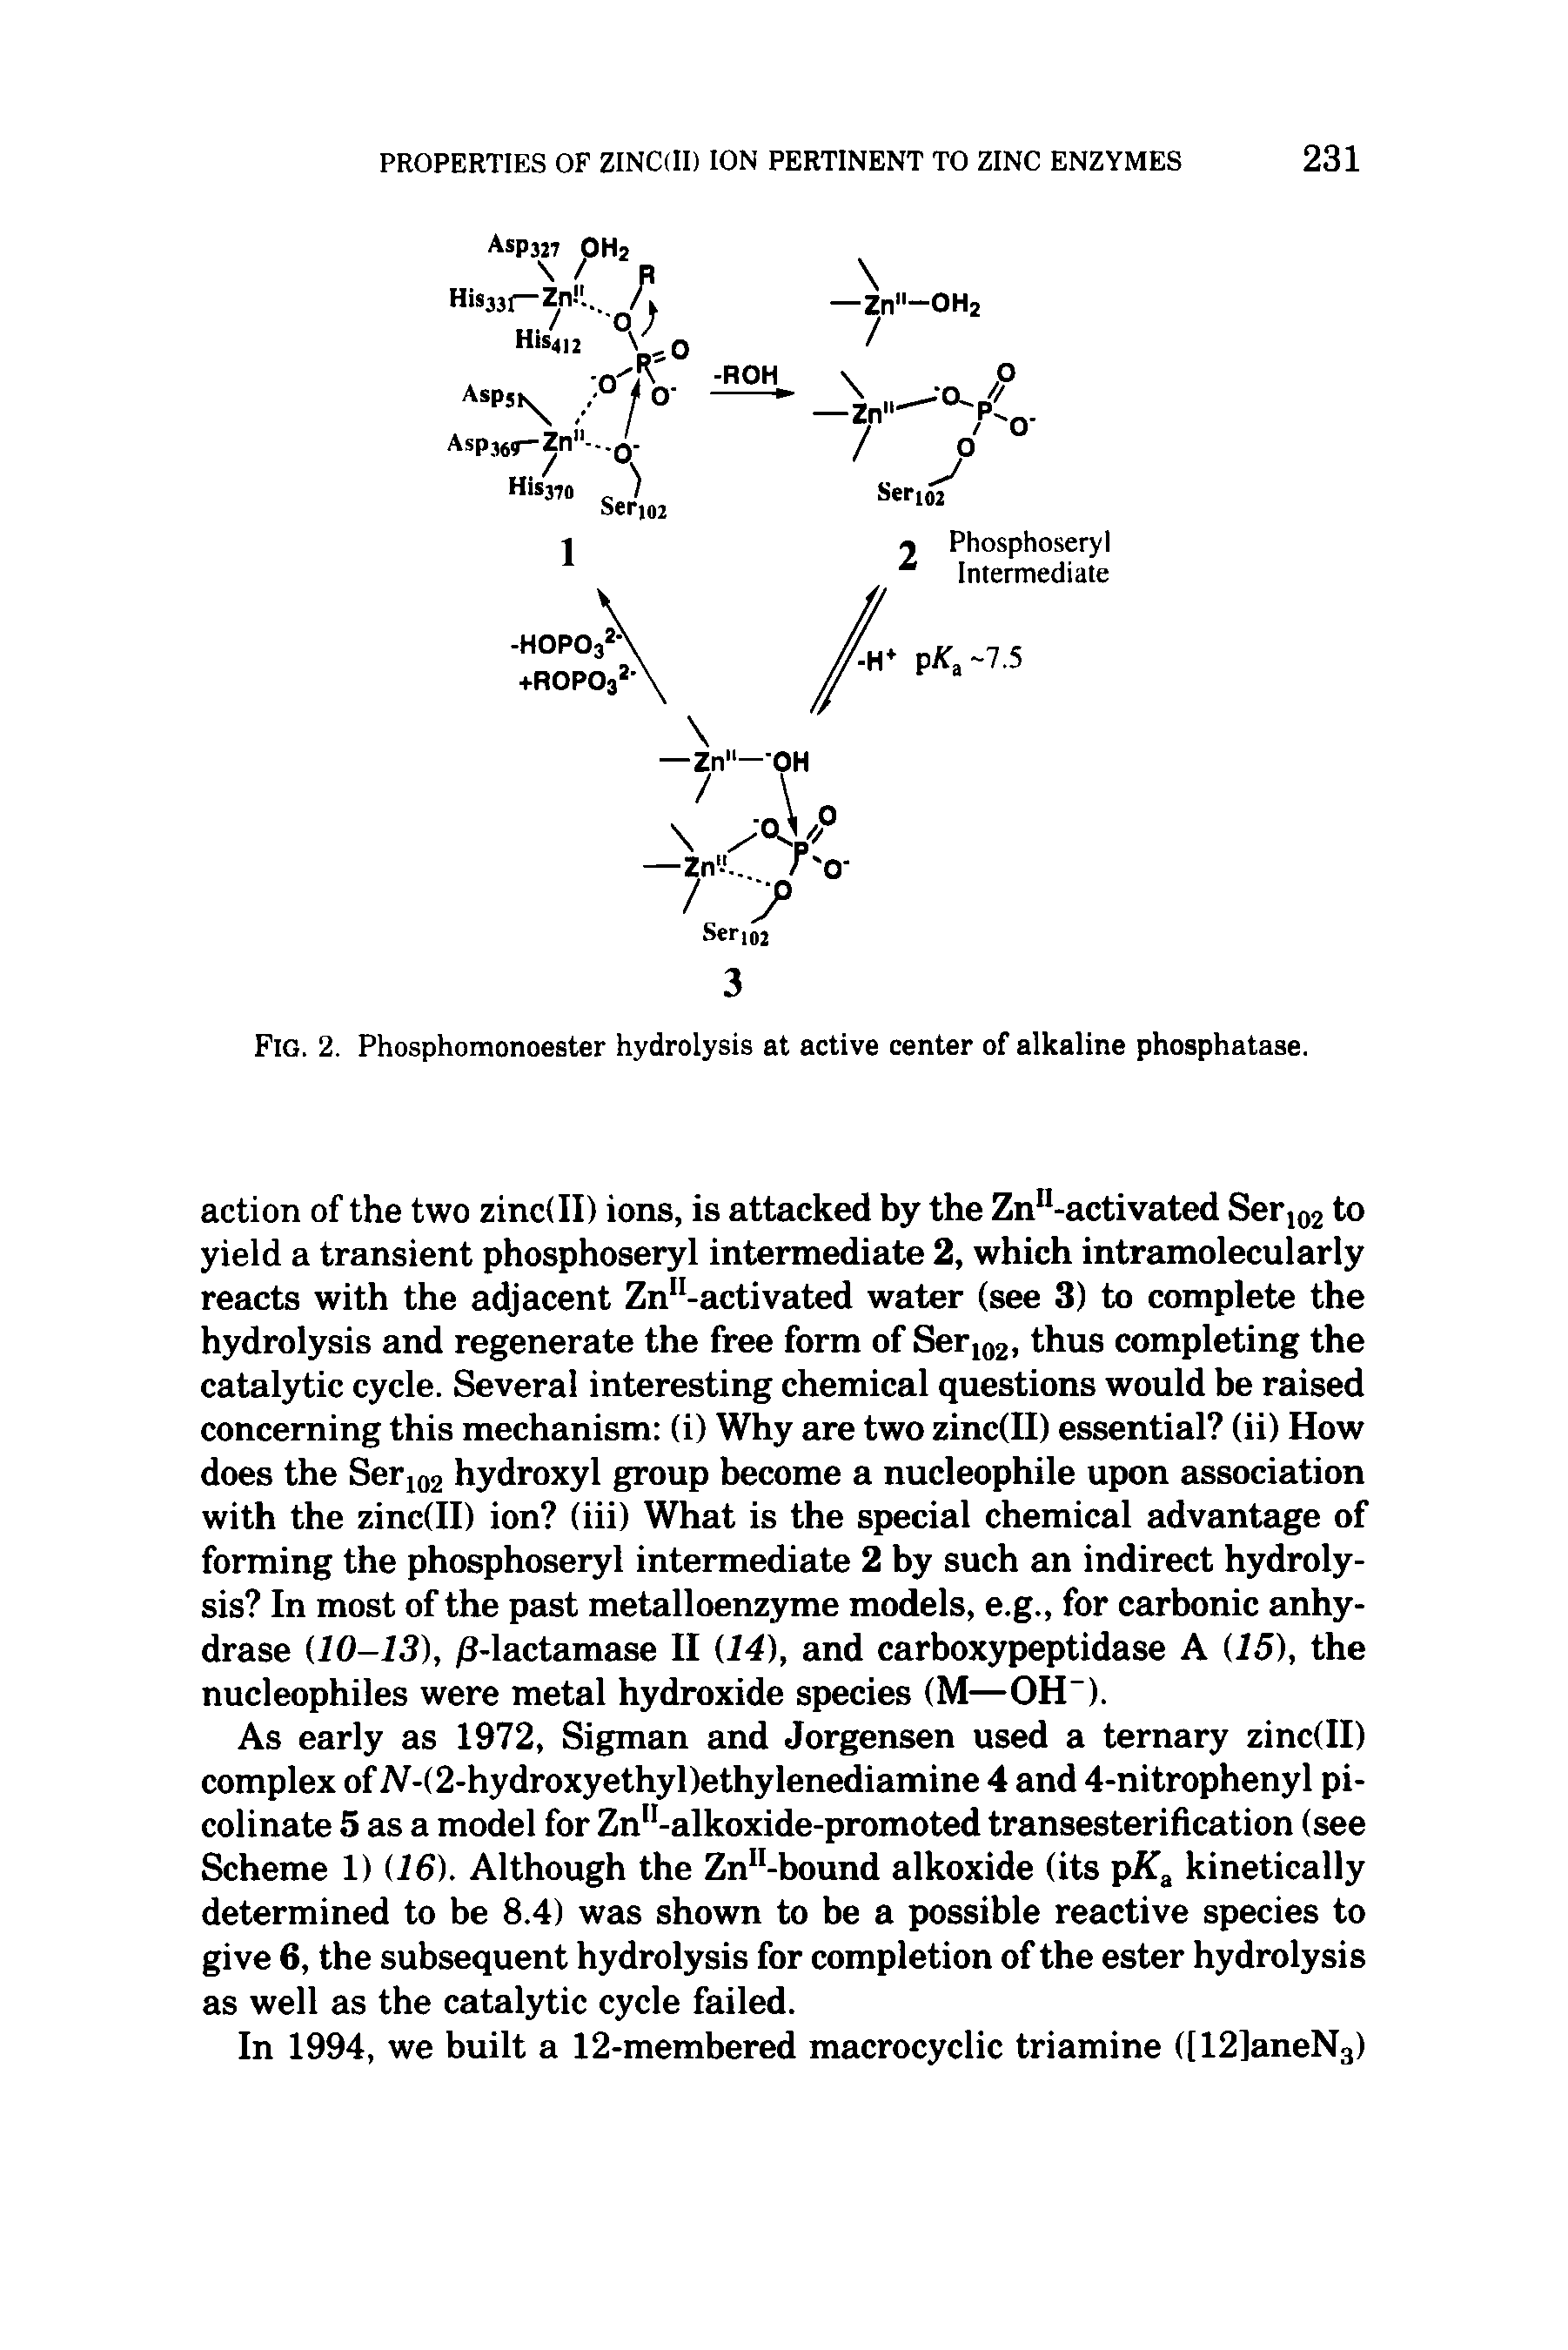 Fig. 2. Phosphomonoester hydrolysis at active center of alkaline phosphatase.